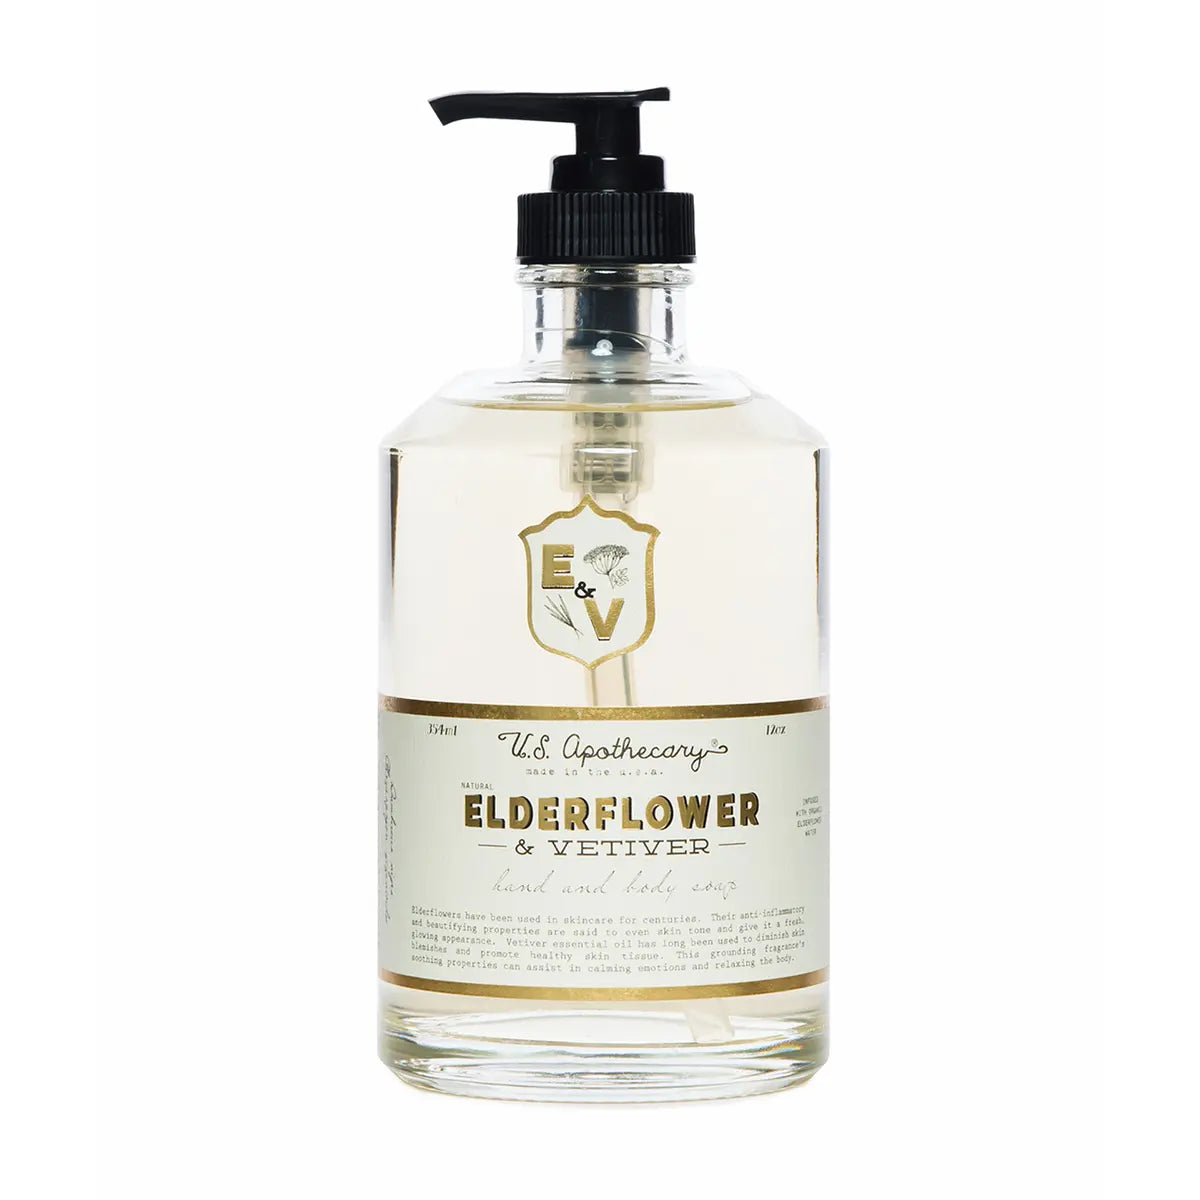 K Hall Studio Elderflower amf Vetiver Apothecary Hand and Body Soap